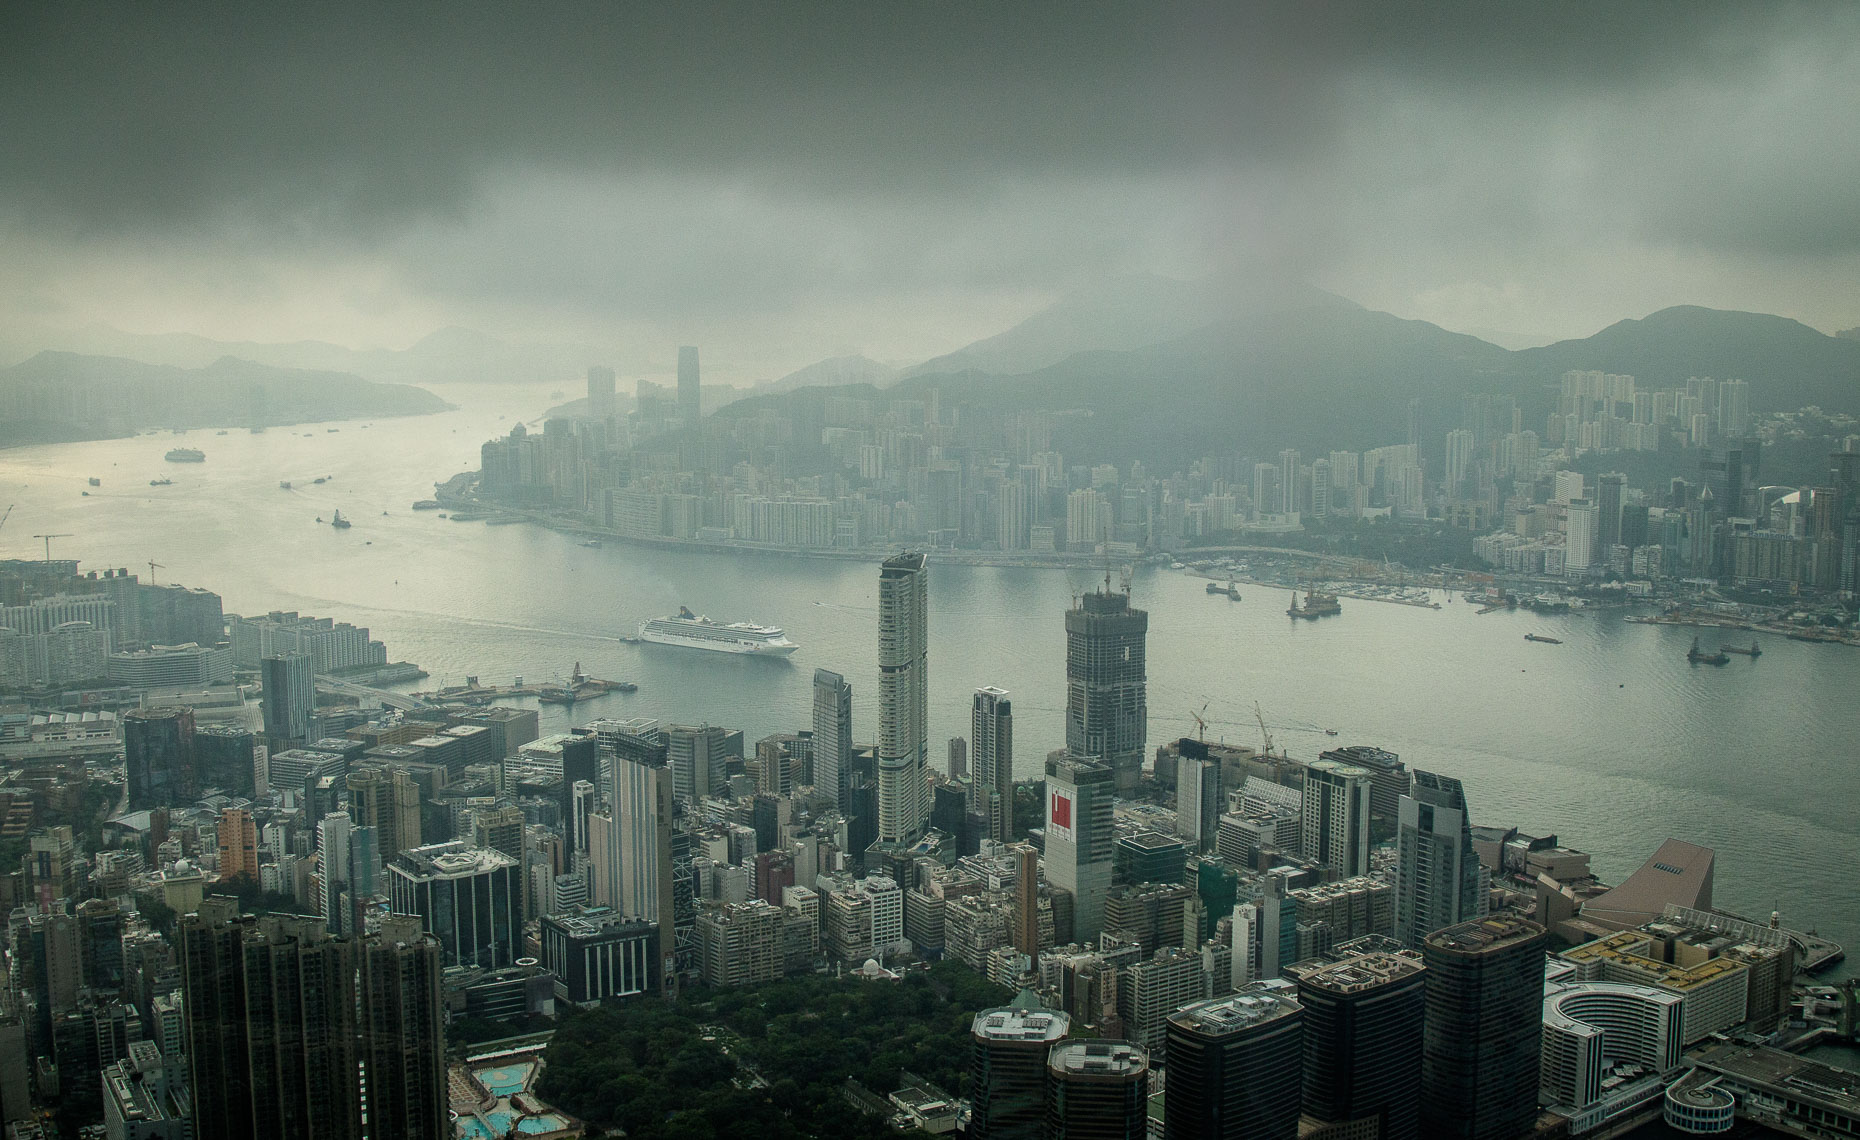 Victoria Harbor View - Kowloon